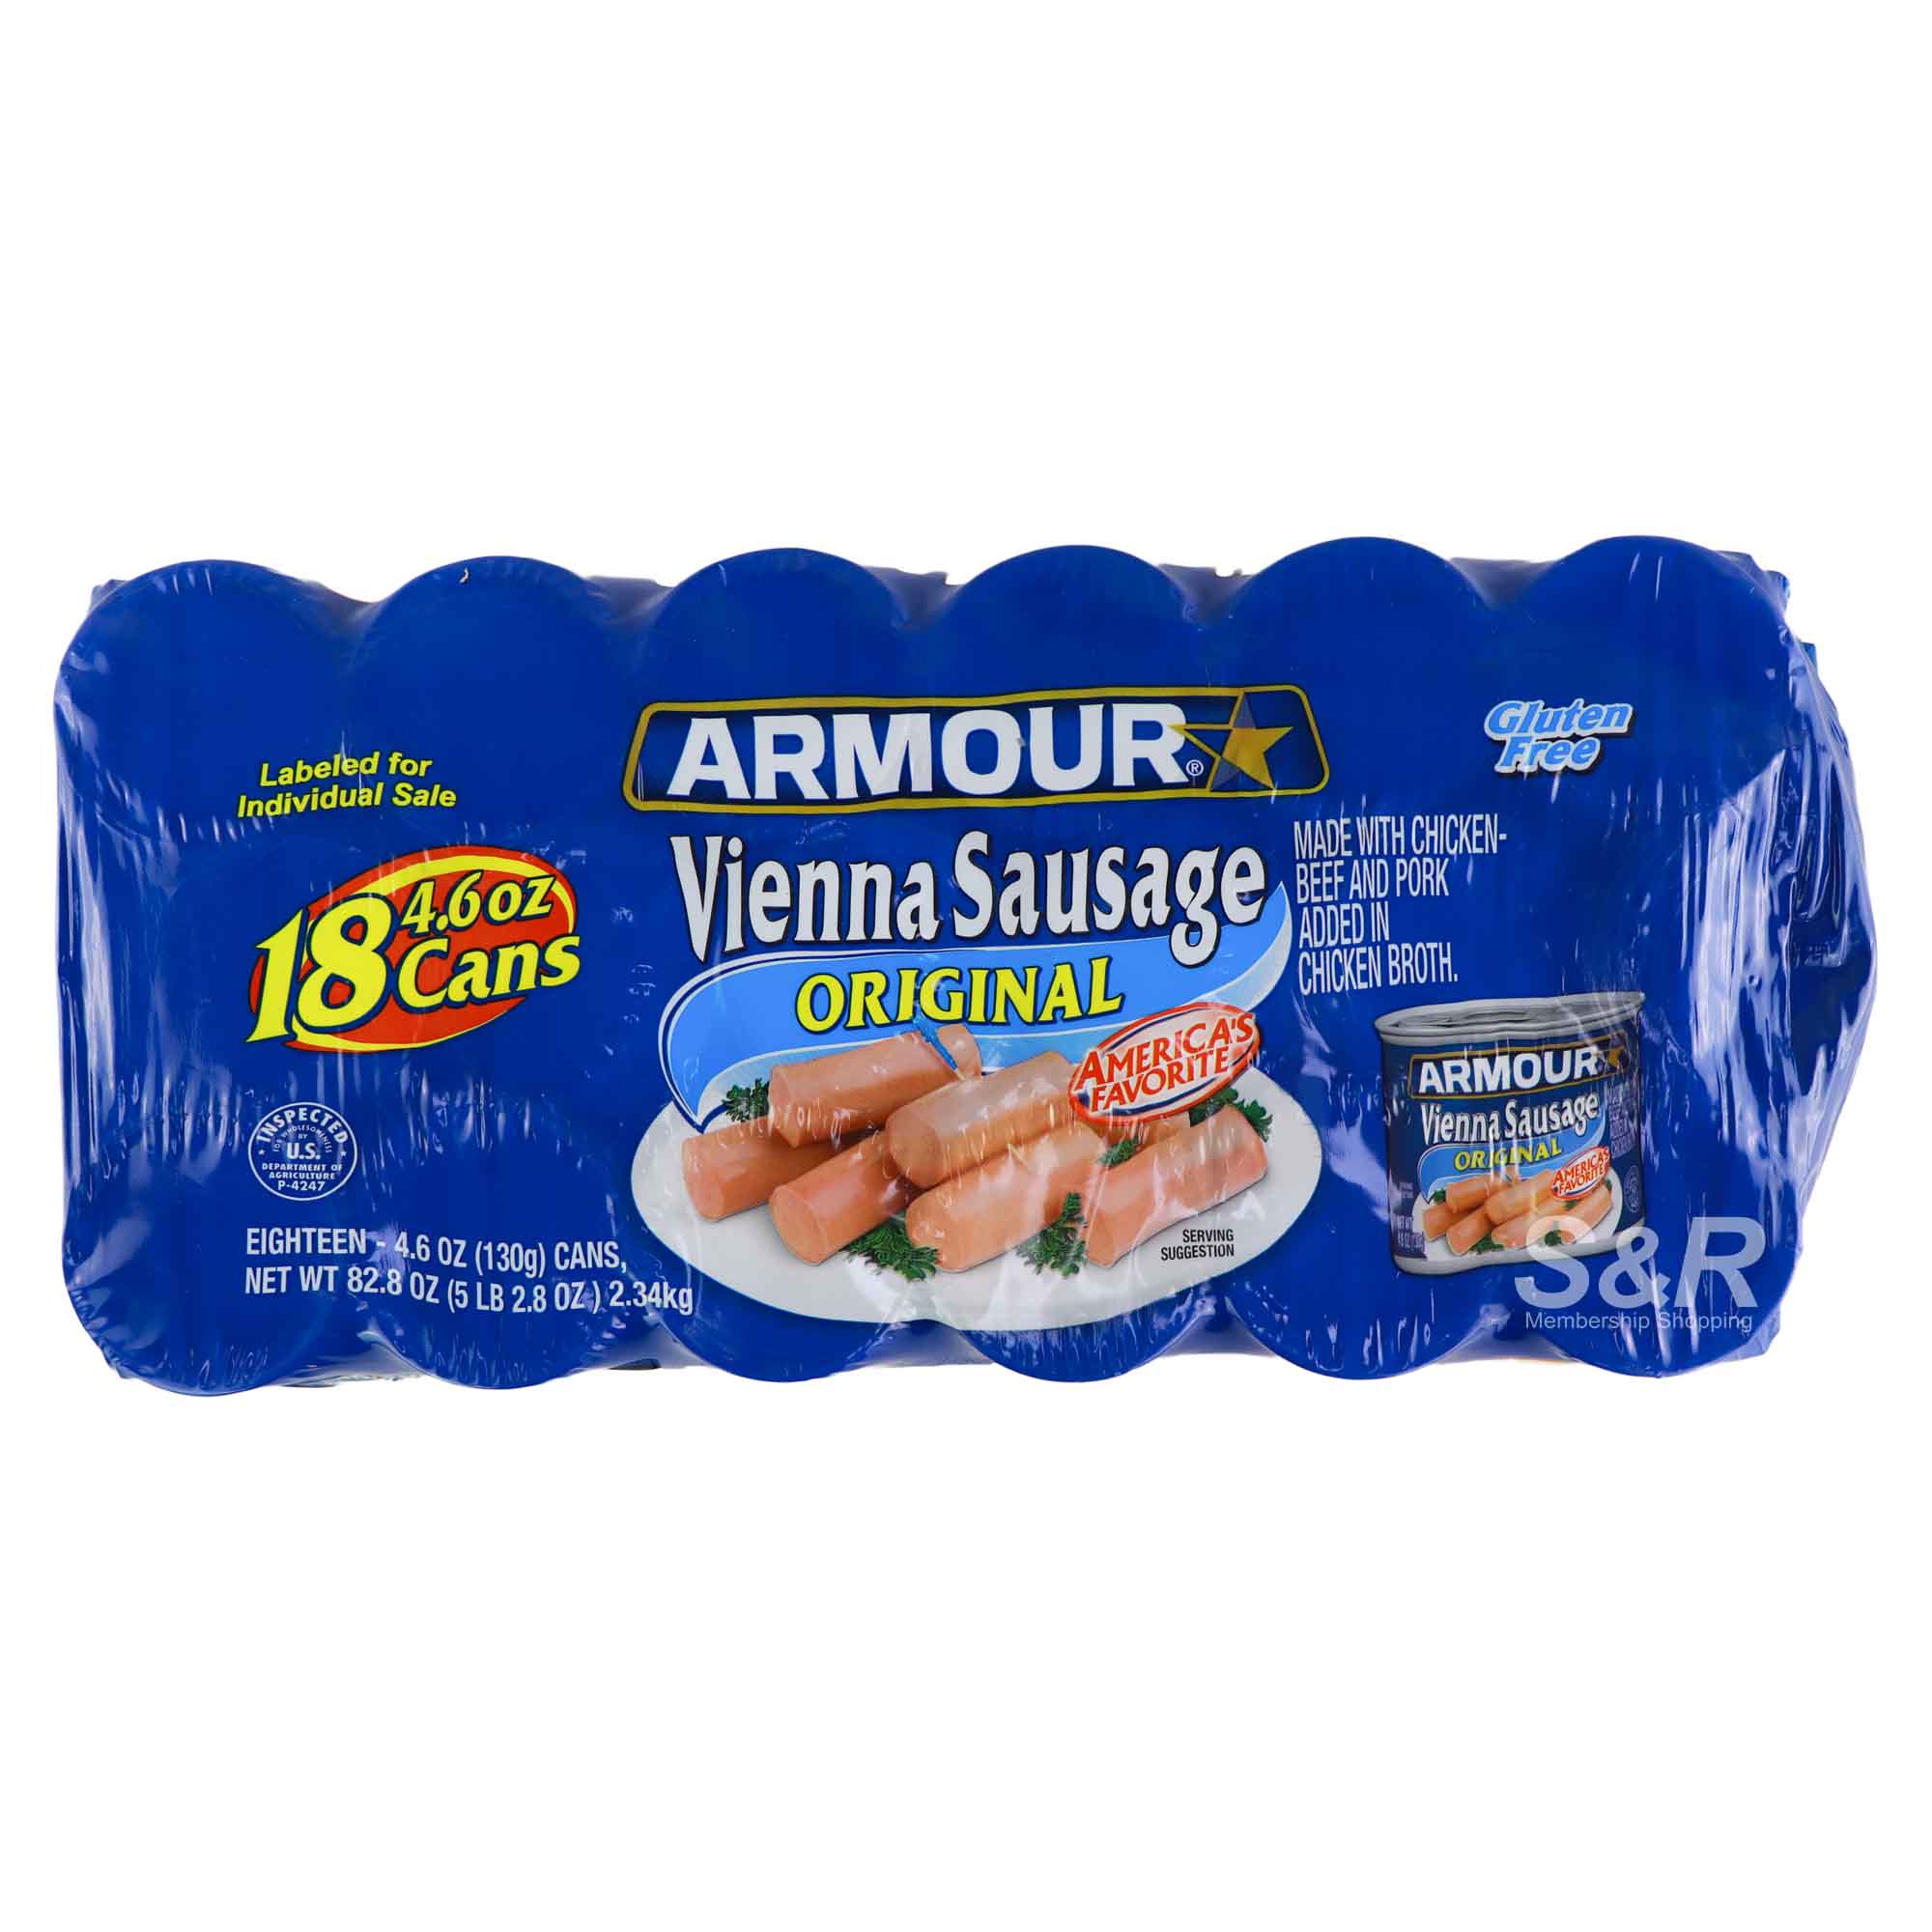 Armour Vienna Sausage Original 18 cans